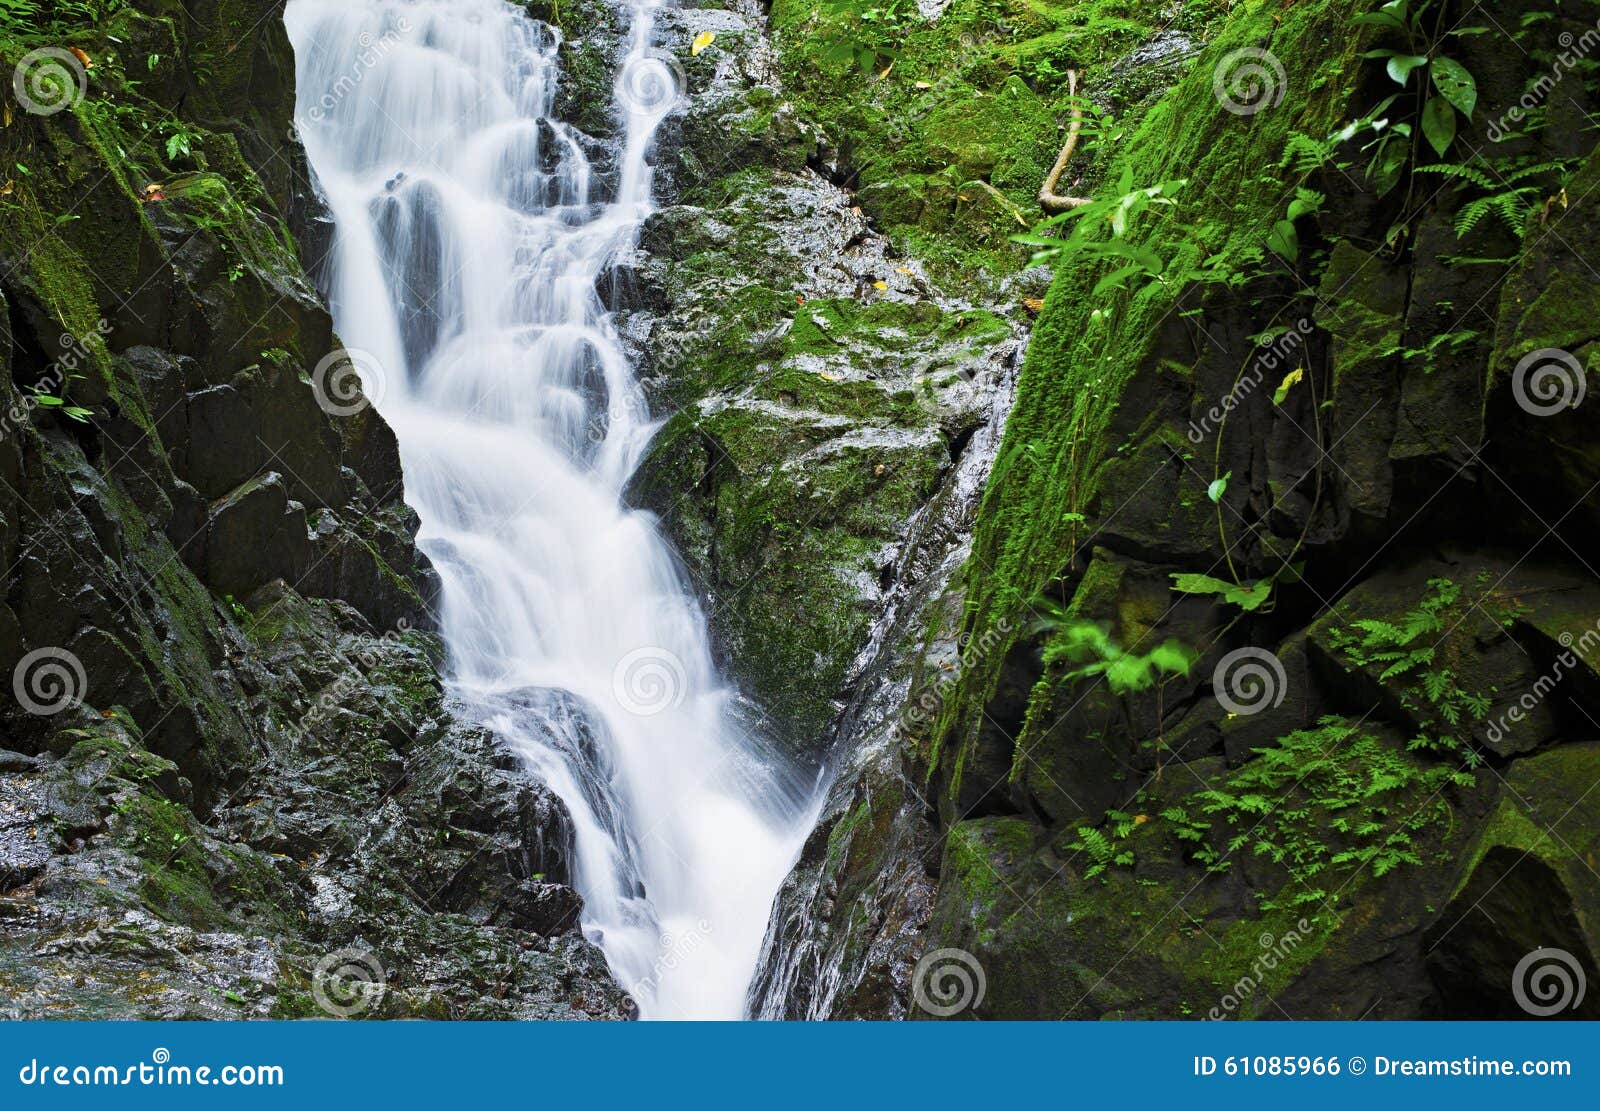 Sai Waterfall photo. of pisgah - 61085966